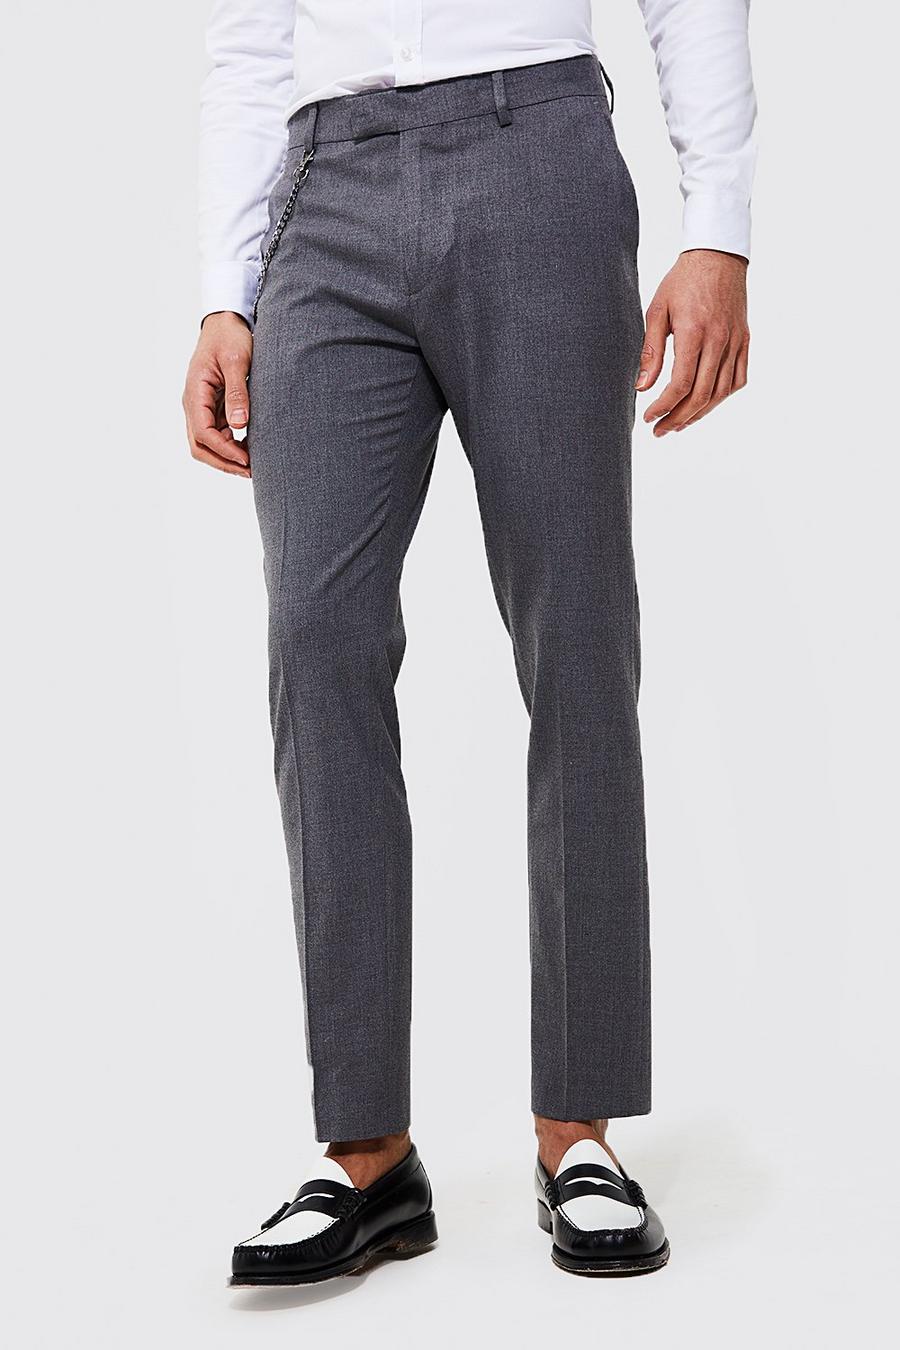 Light grey gris מכנסיים אלגנטיים חלקים בגזרת סקיני עם שרשרת